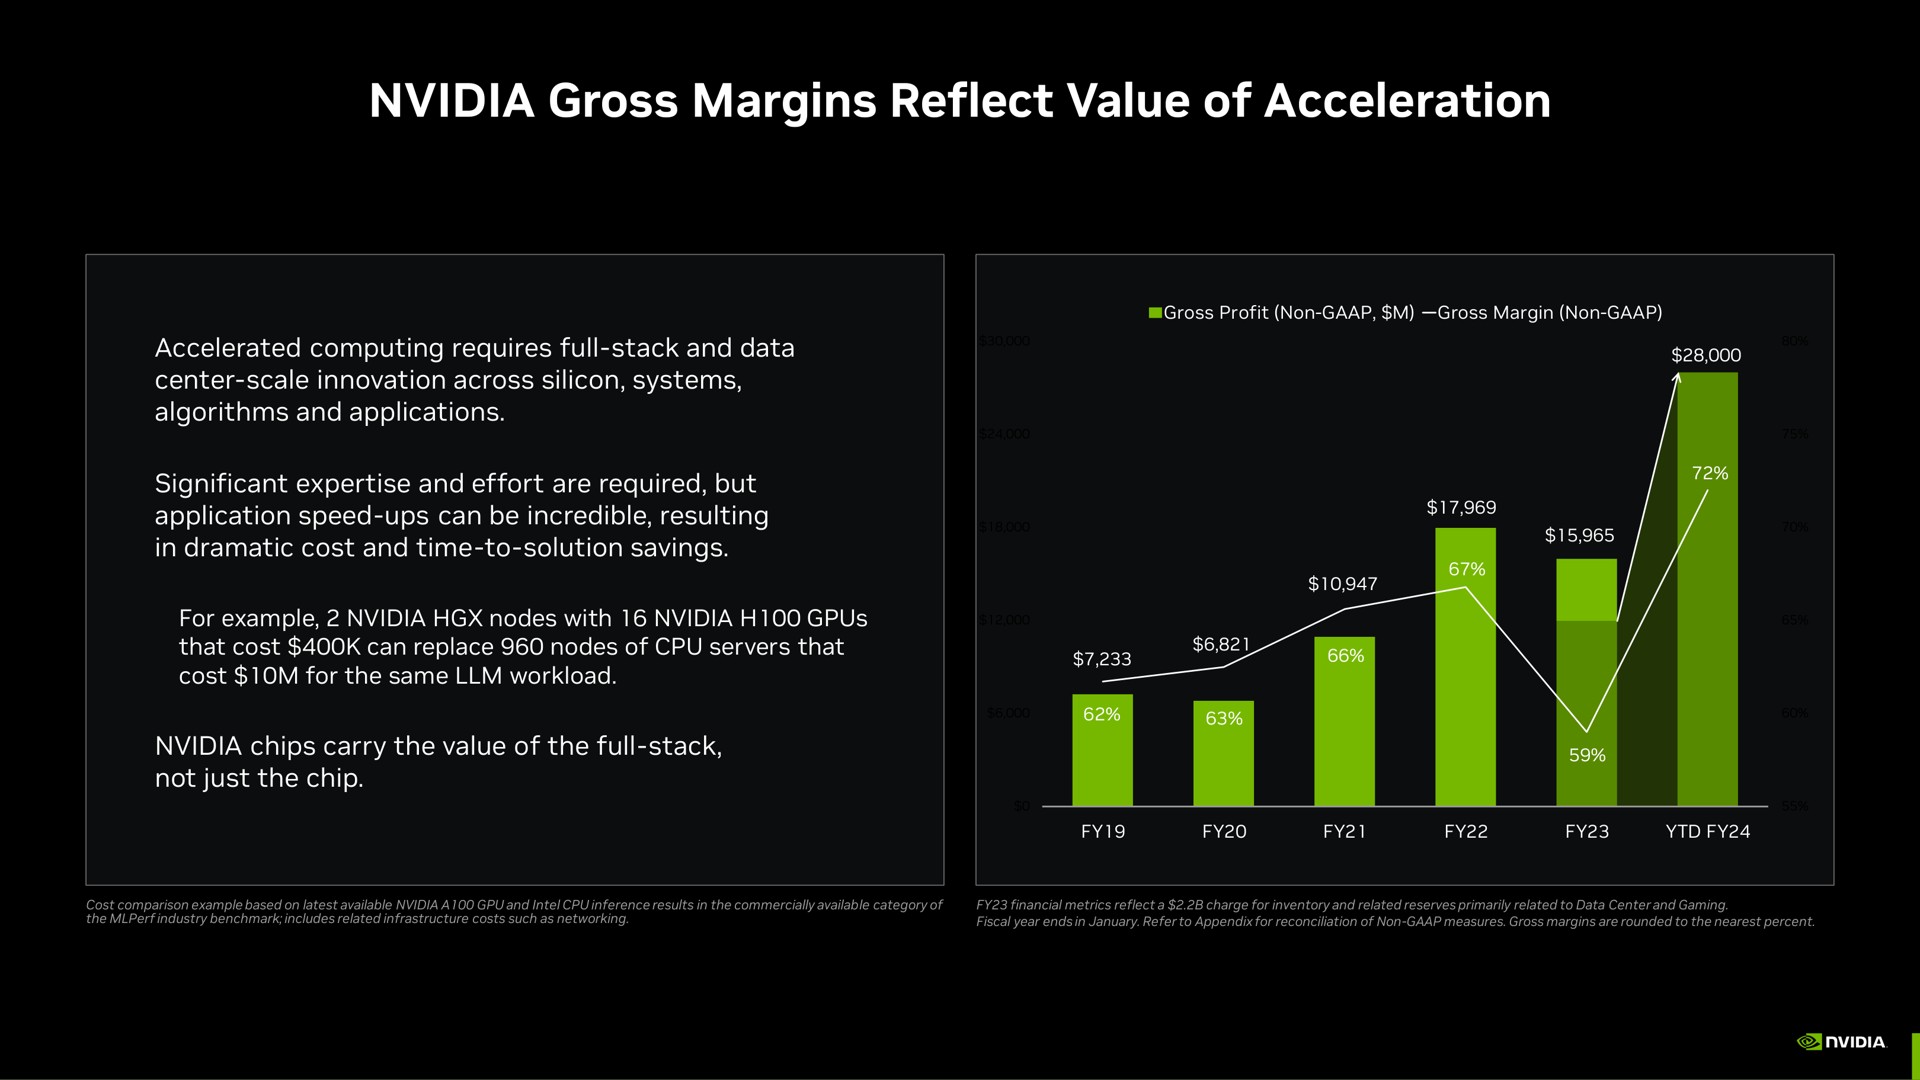 gross margins reflect value of acceleration | NVIDIA